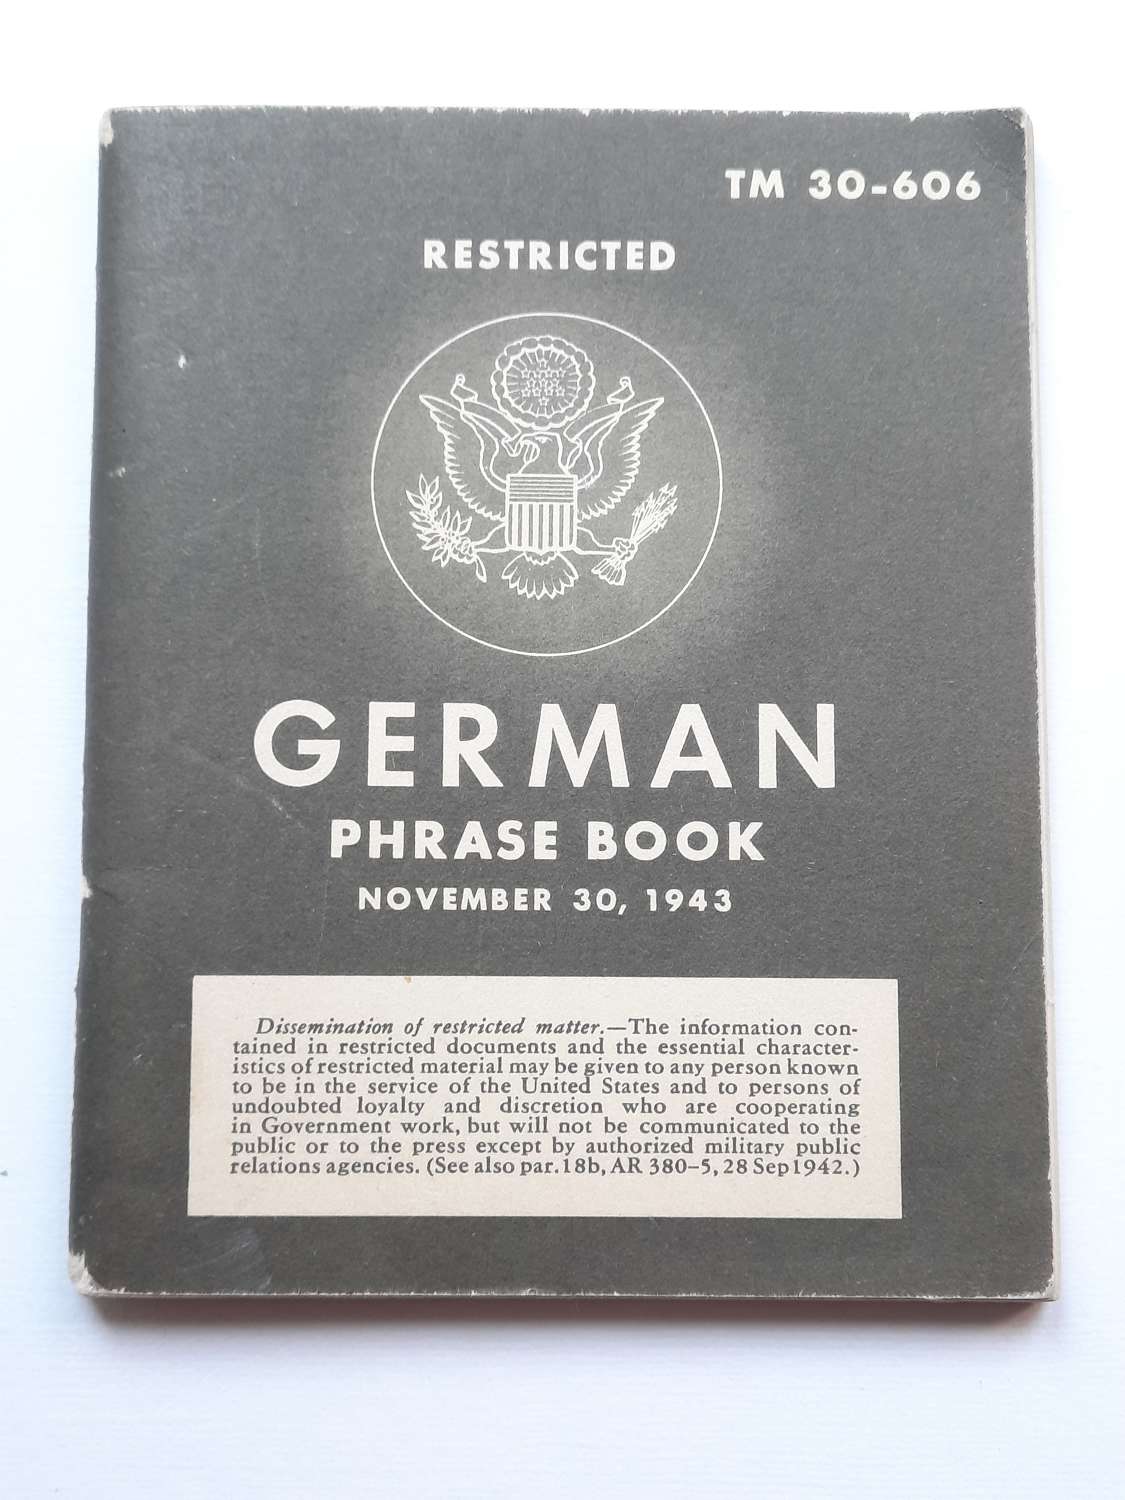 WW2 US German Phrase Book